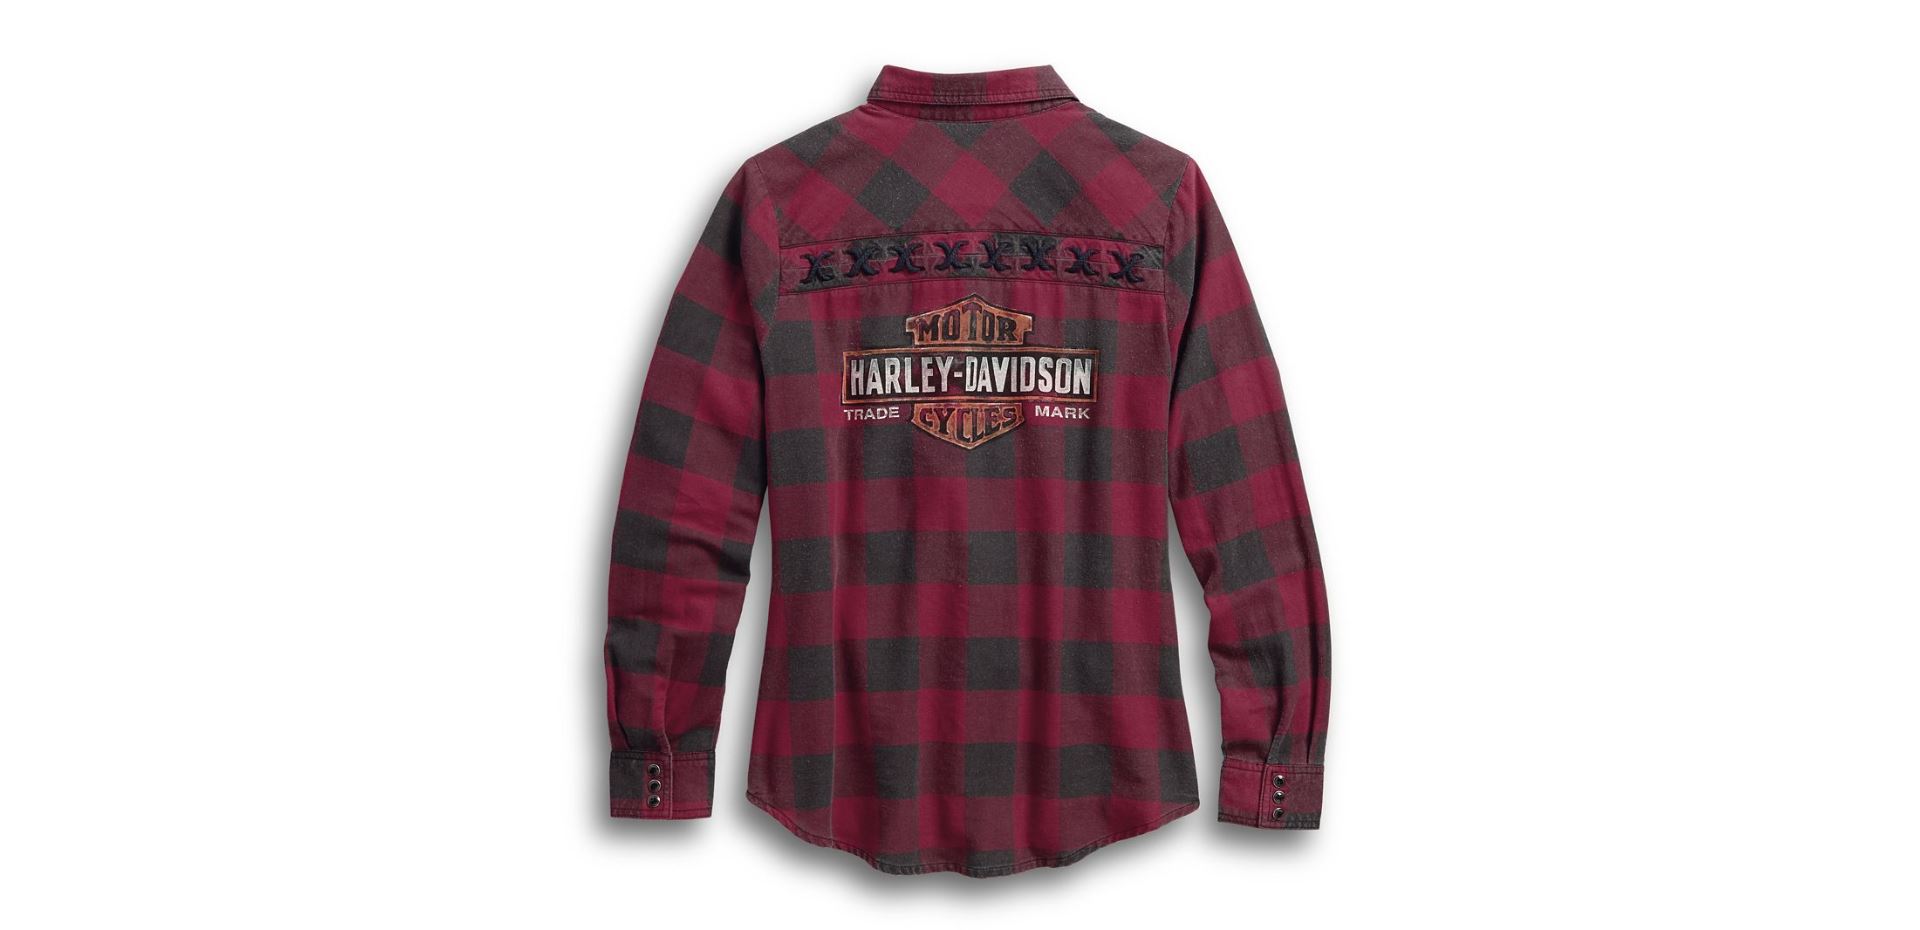 Harley-Davidson Women's Genuine Laced Yoke Plaid Shirt - 99109-17VW